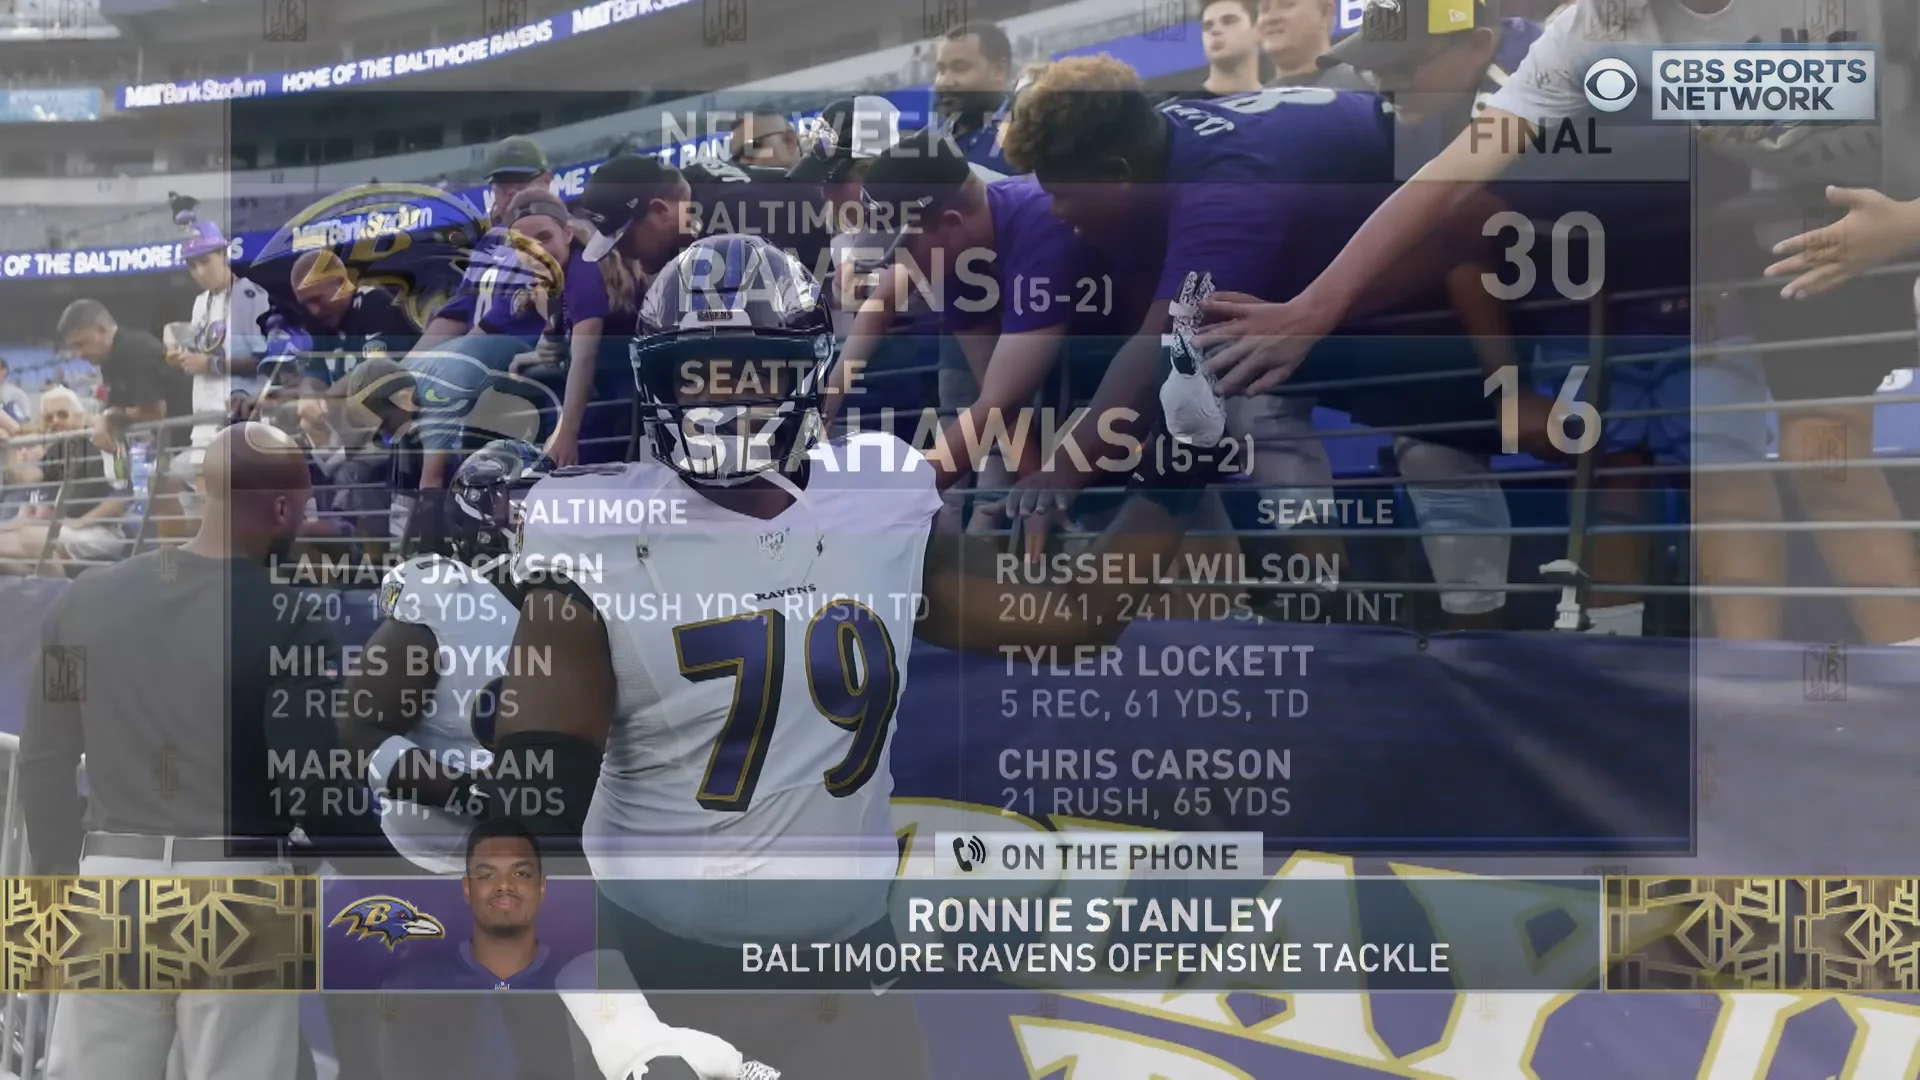 Lamar Jackson's Ravens Leadership Shown in Stirring Video